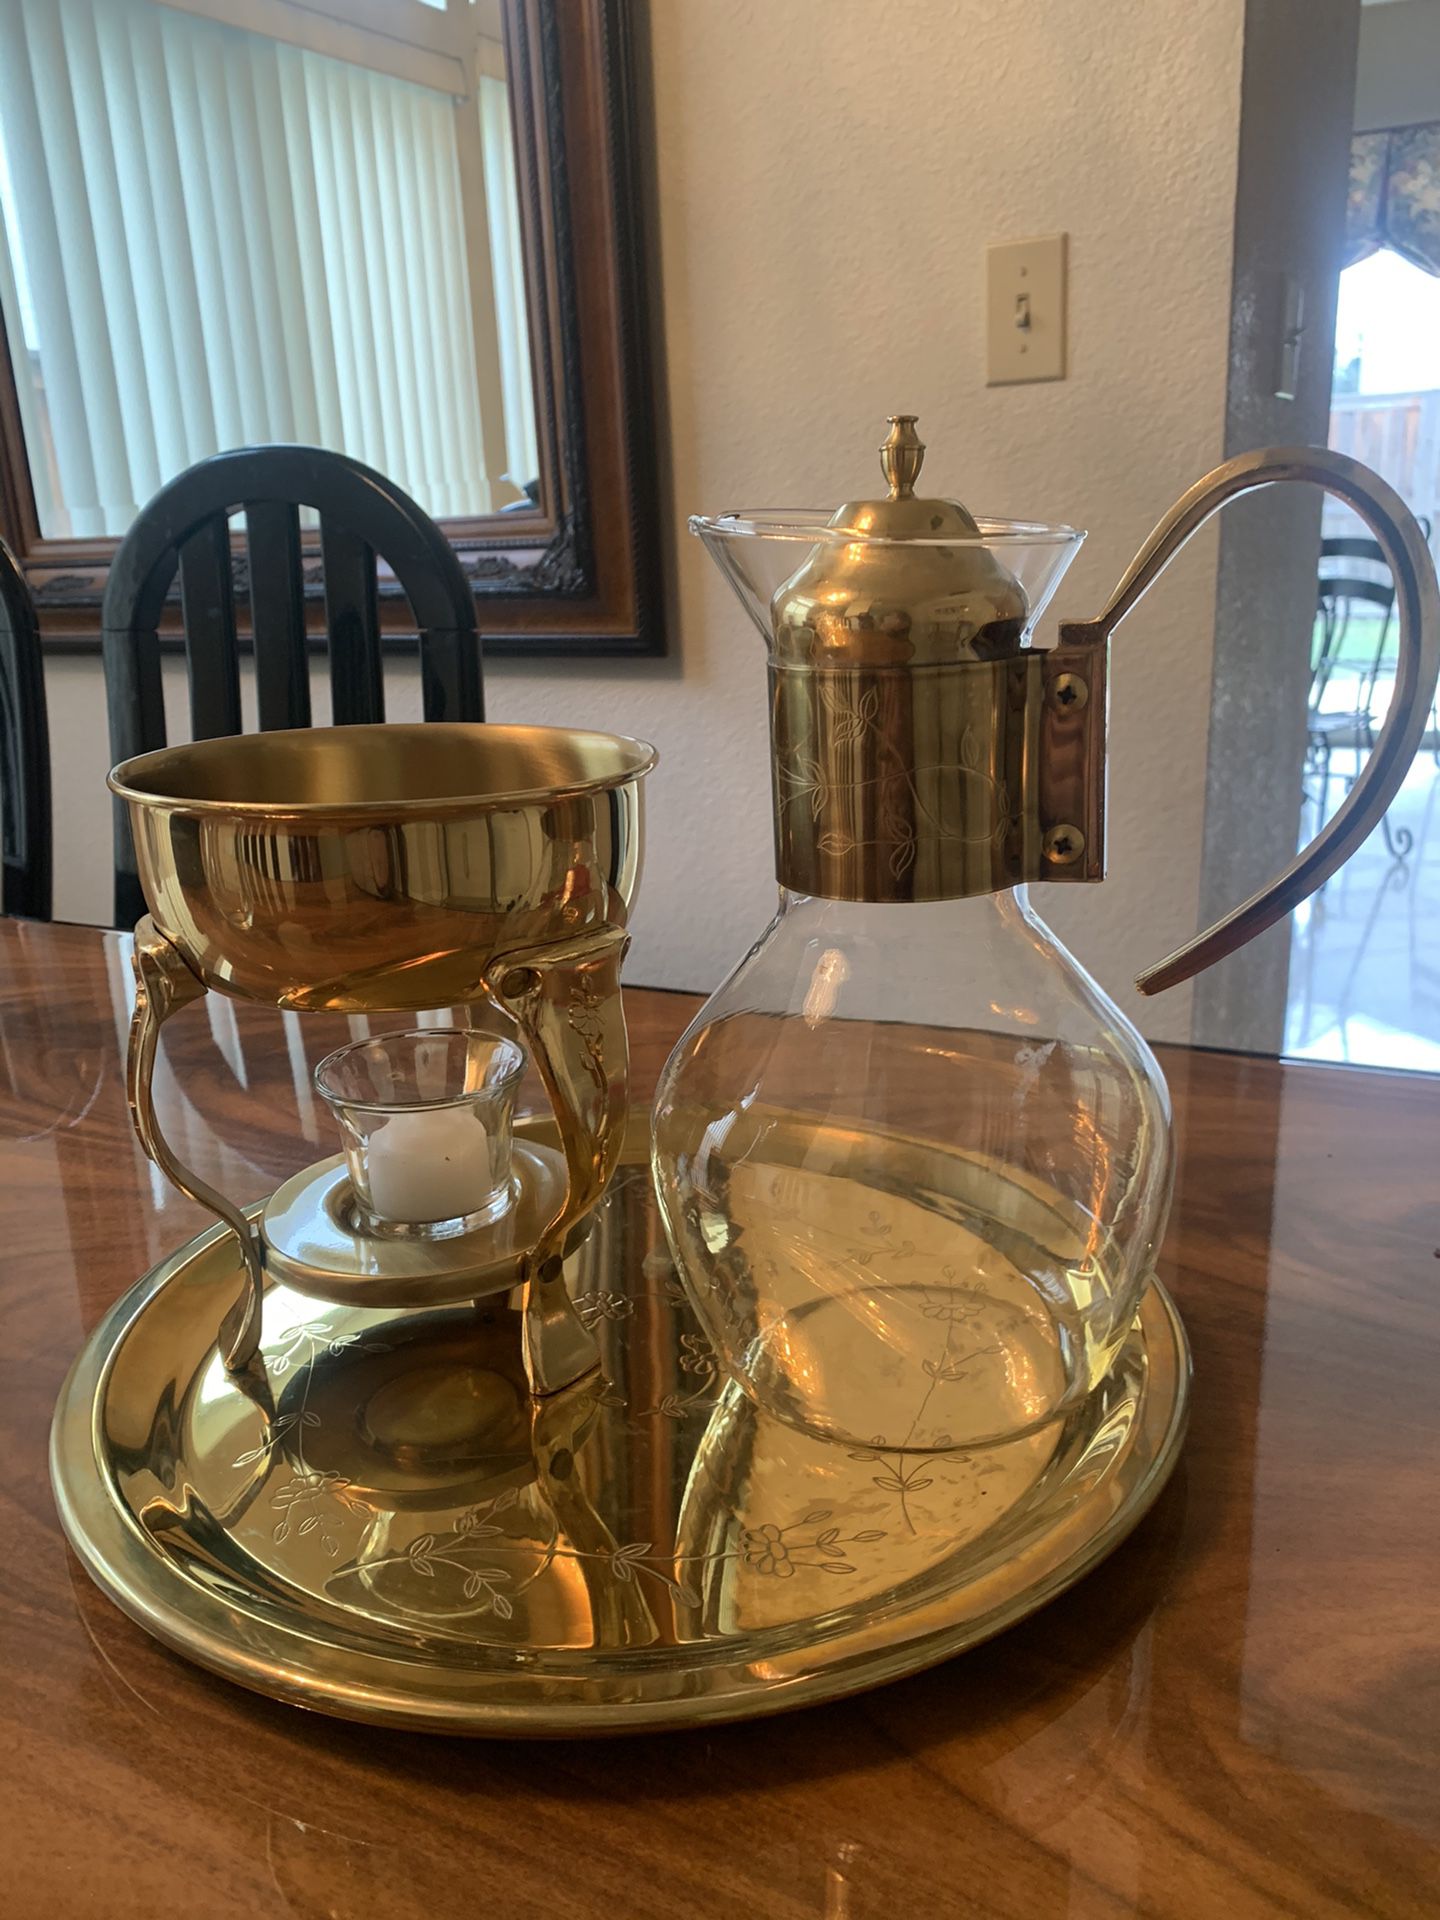 Princess House Tea Pot with Wine Decanter and 2 Plates Set